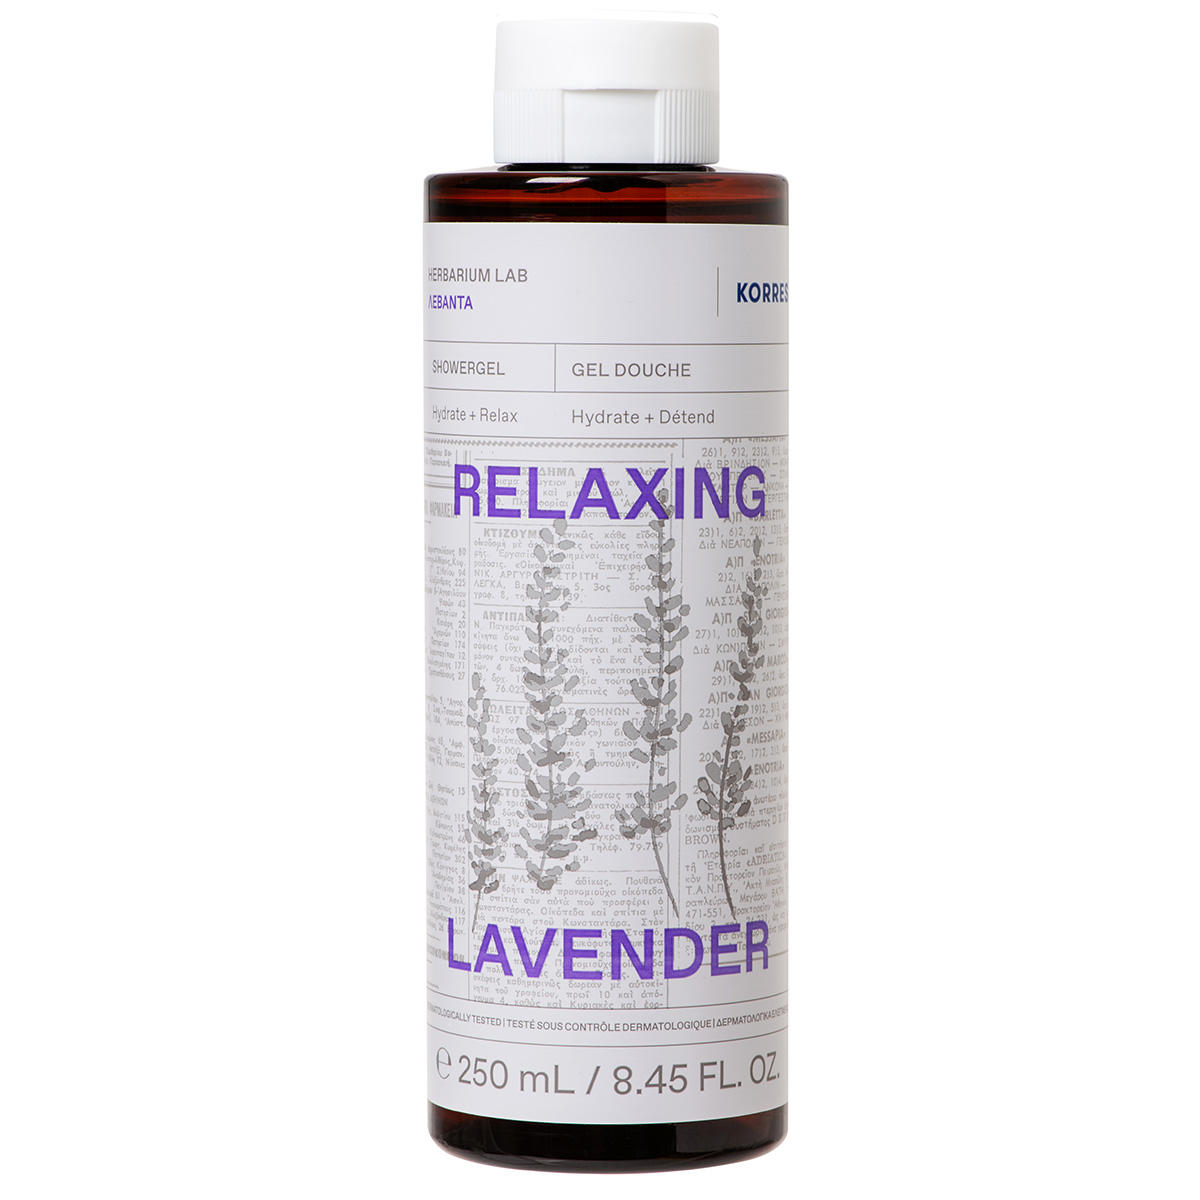 KORRES Relaxing Lavender Shower Gel 250 ml - 1